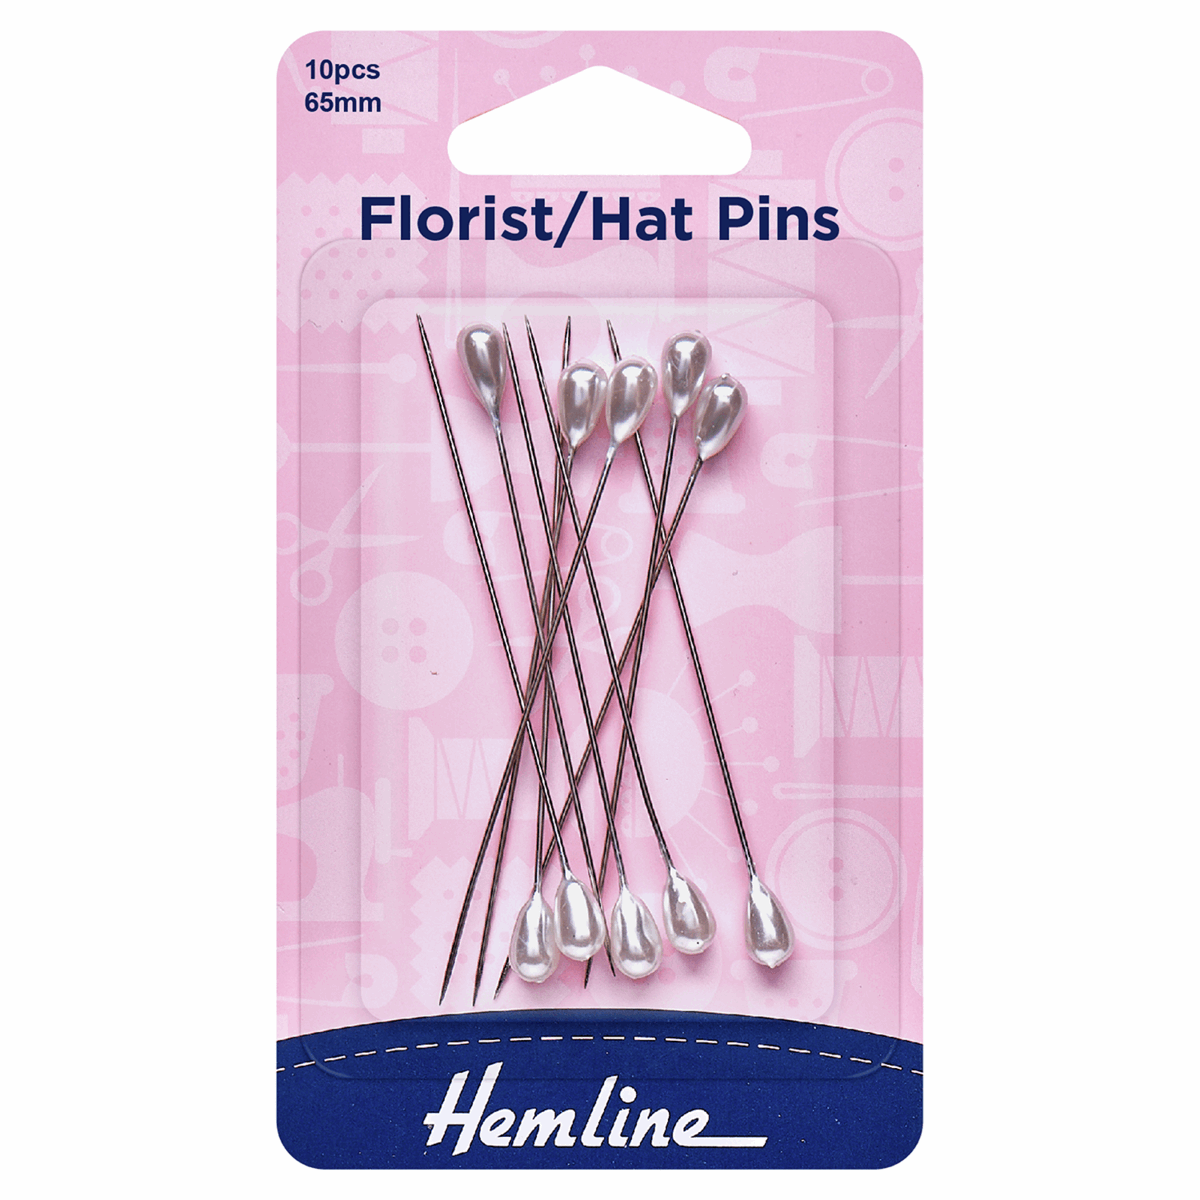 Hemline Florist/Hat Pins - 65mm (Pack of 10)